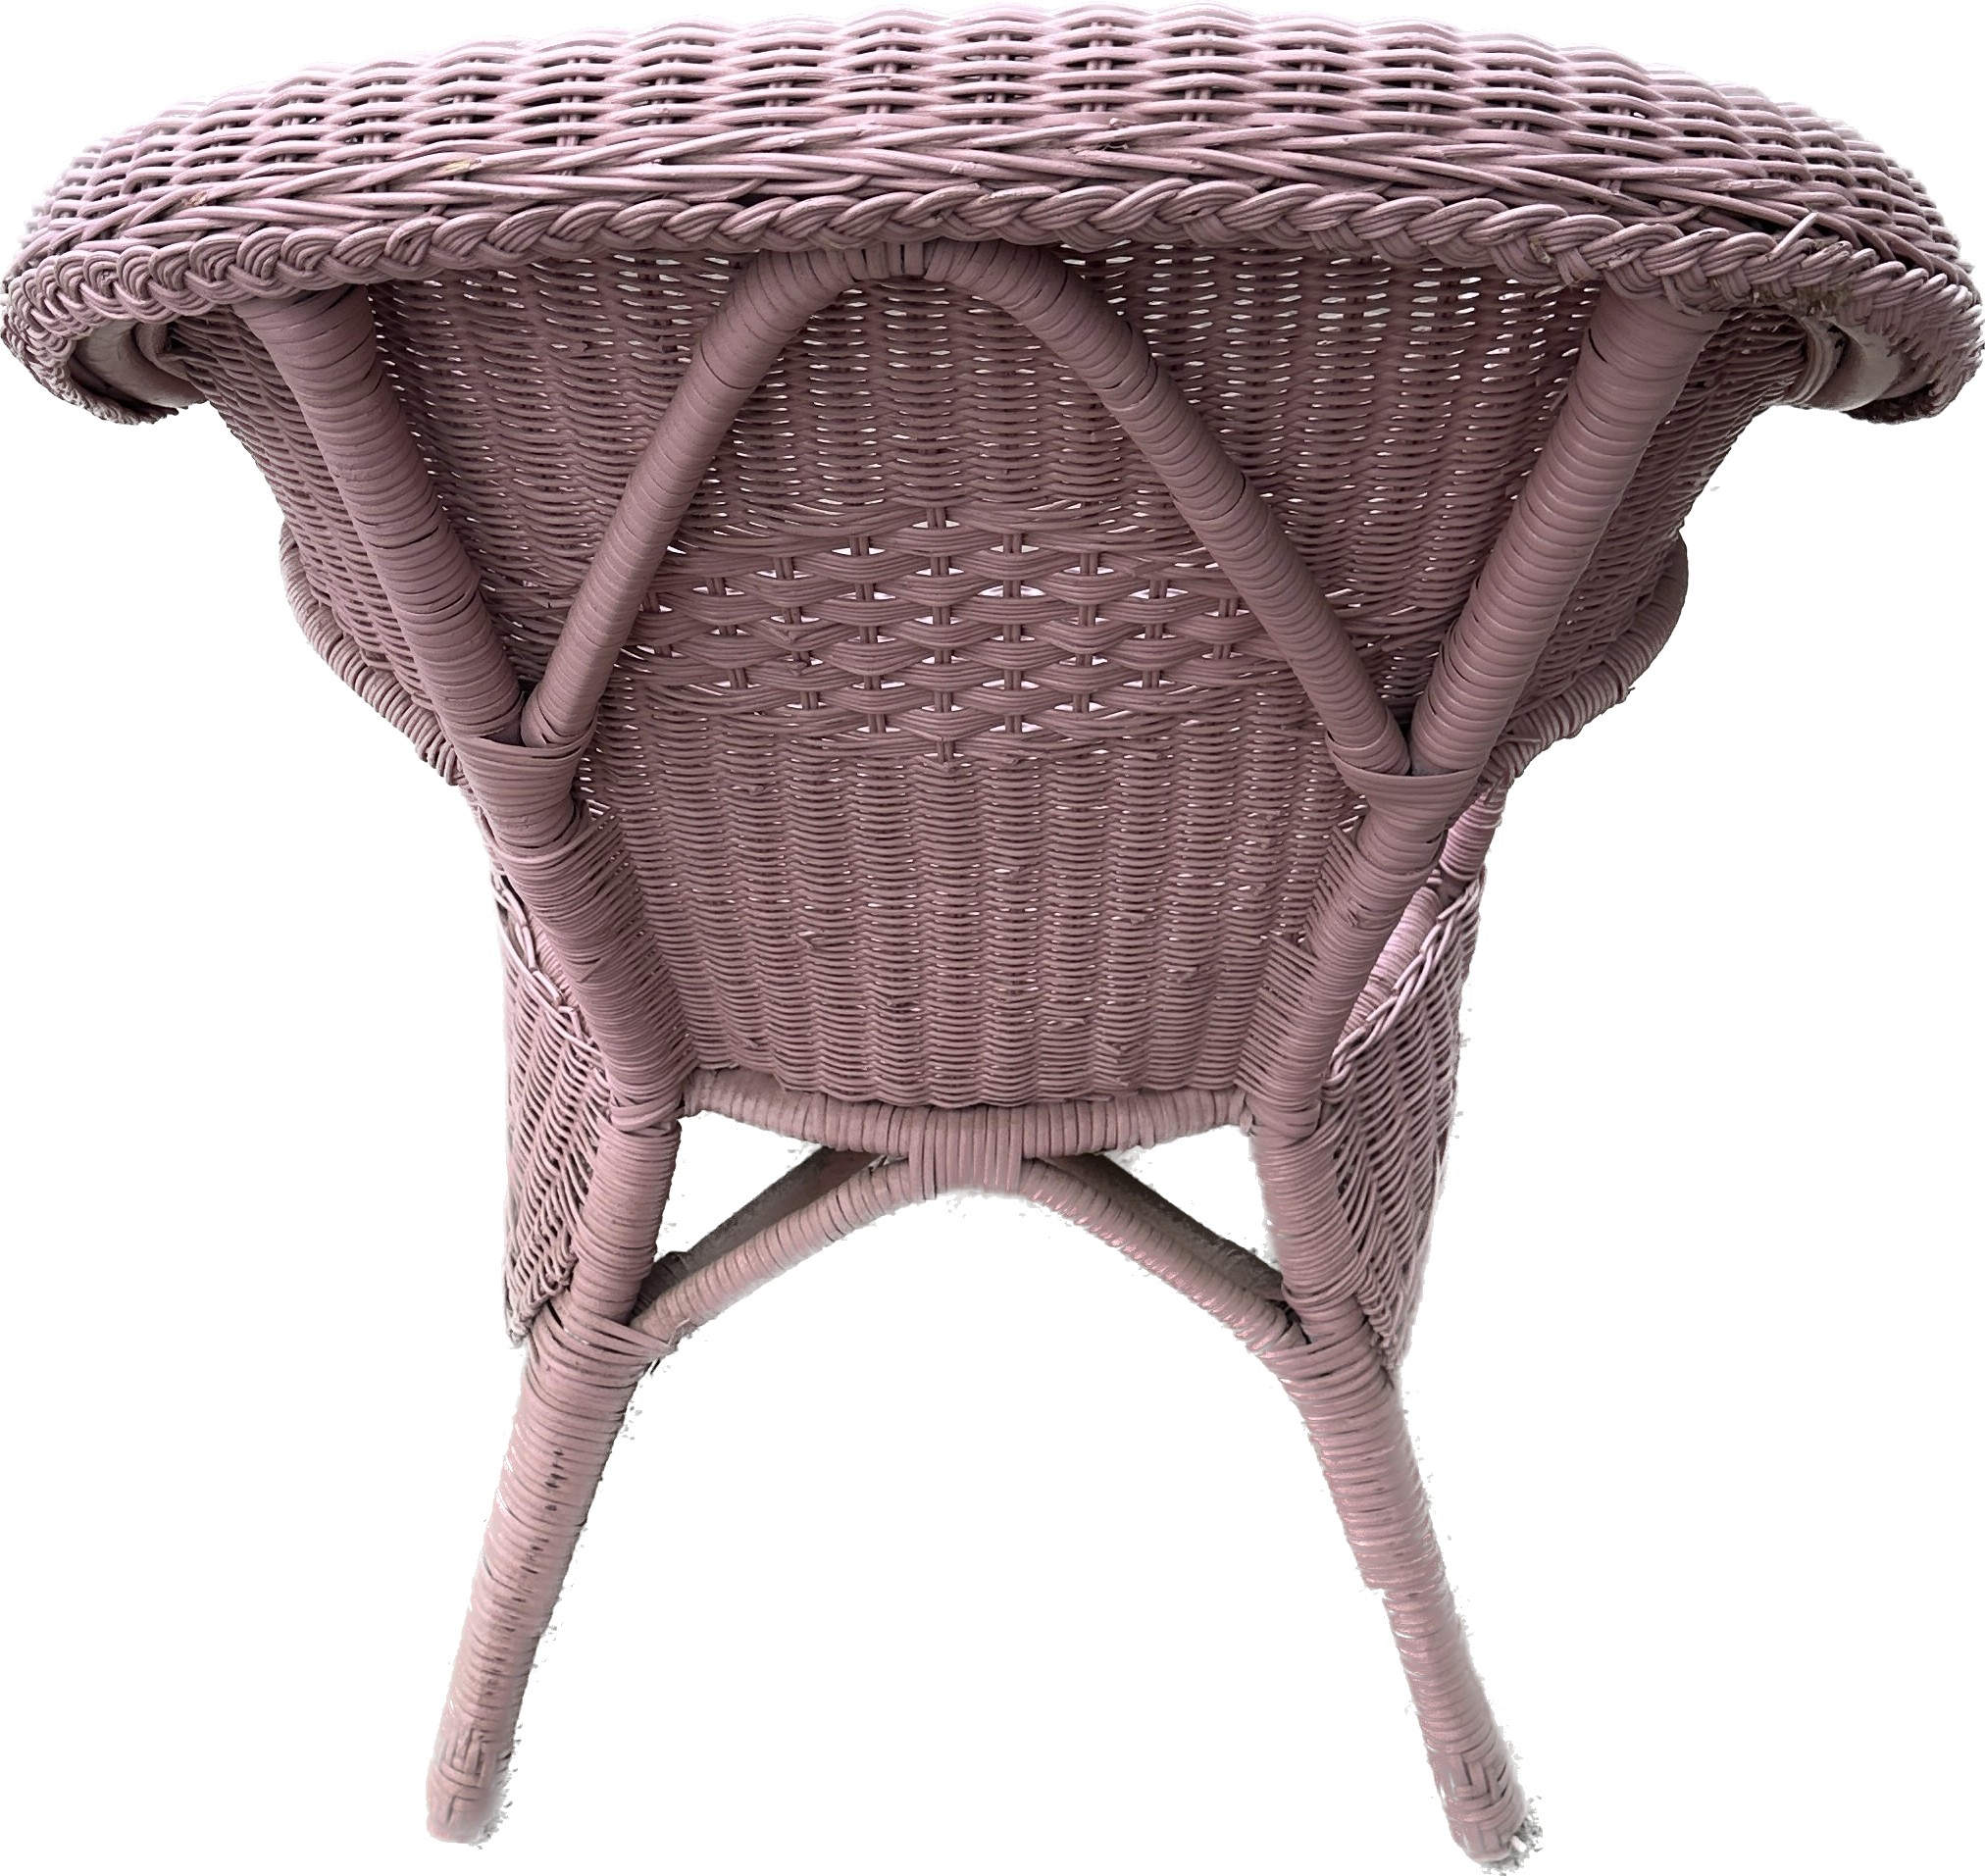 Wicker pink painted bedroom chair - Image 2 of 3